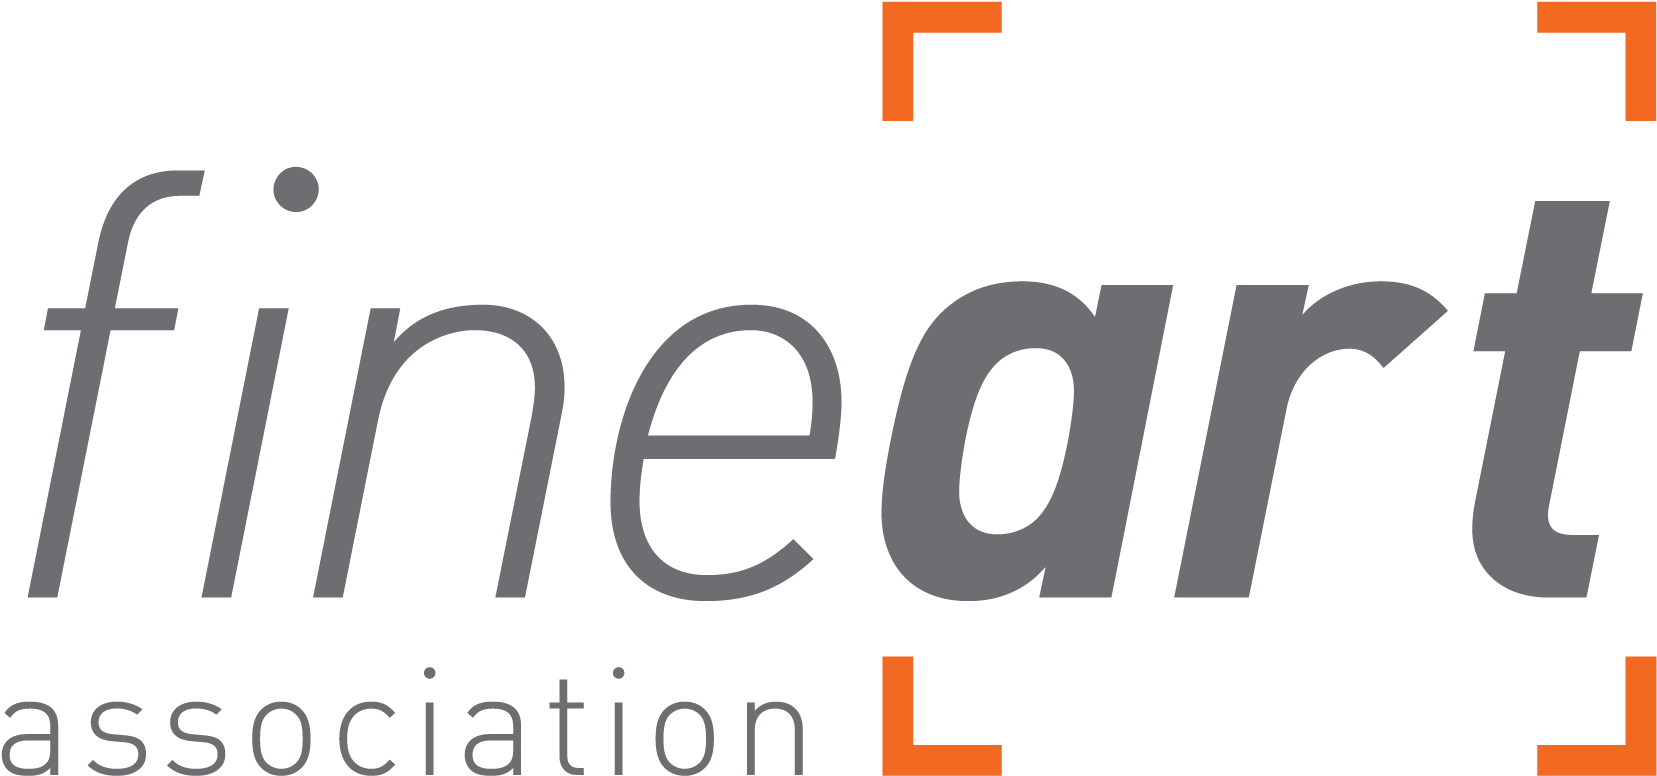 Camila Medici - FineArt Association logo